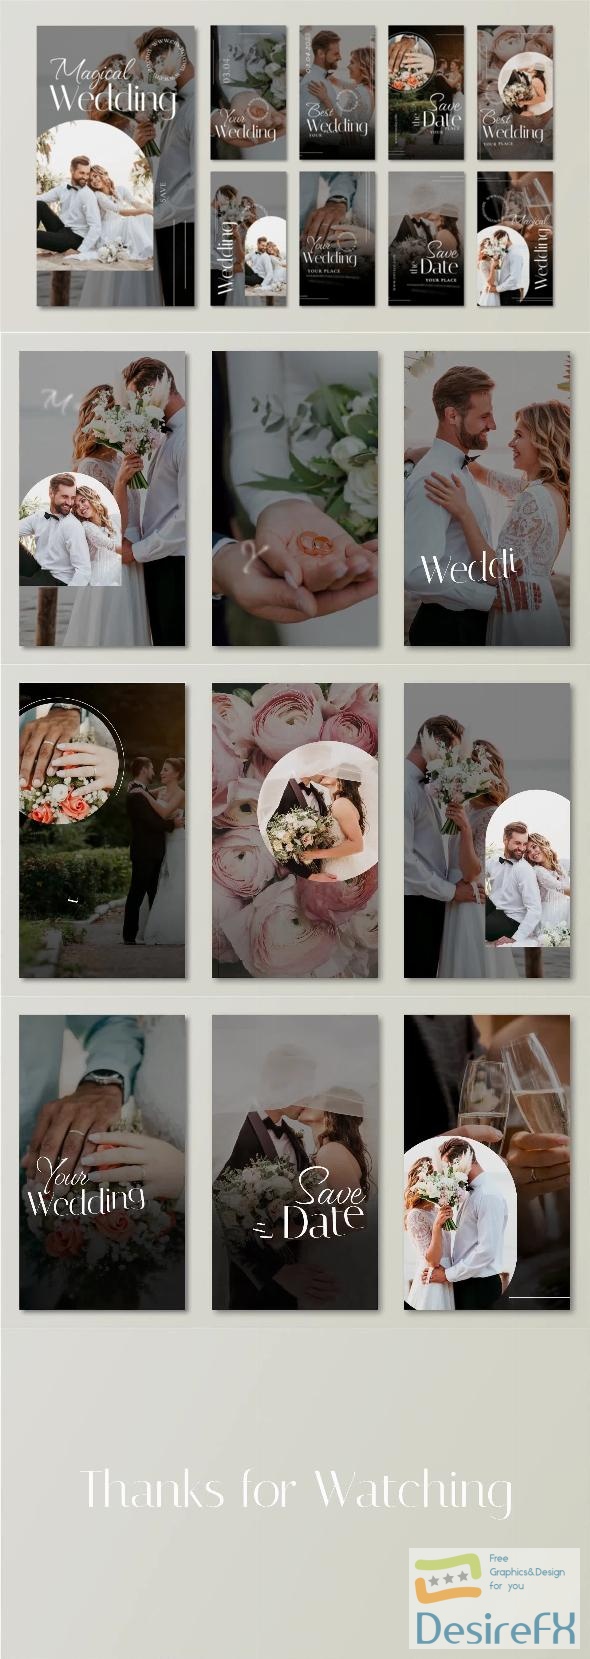 VideoHive Wedding Instagram Story 43367451